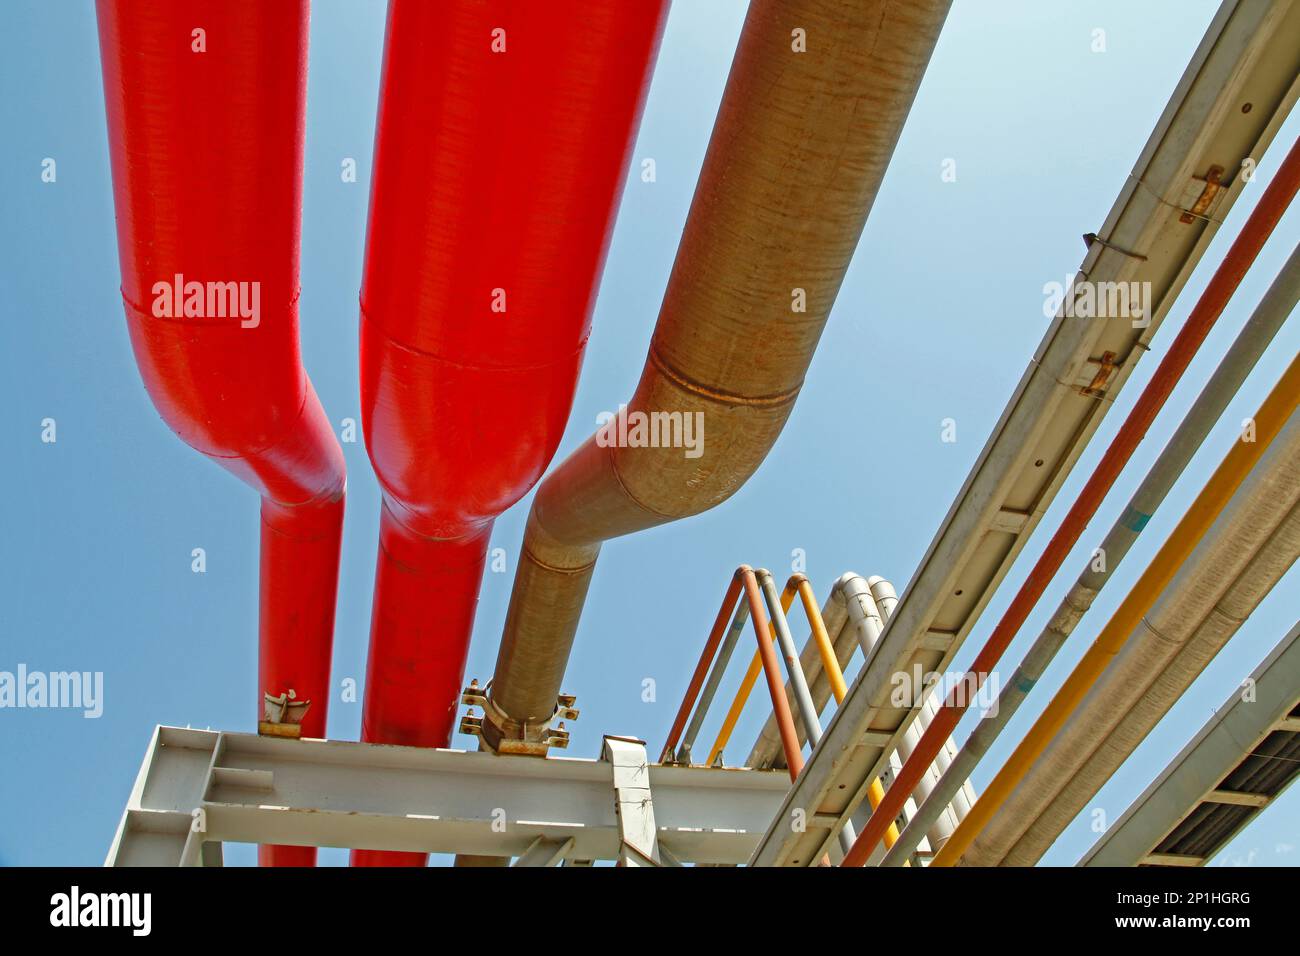 Pipeline of oil fields Stock Photo - Alamy